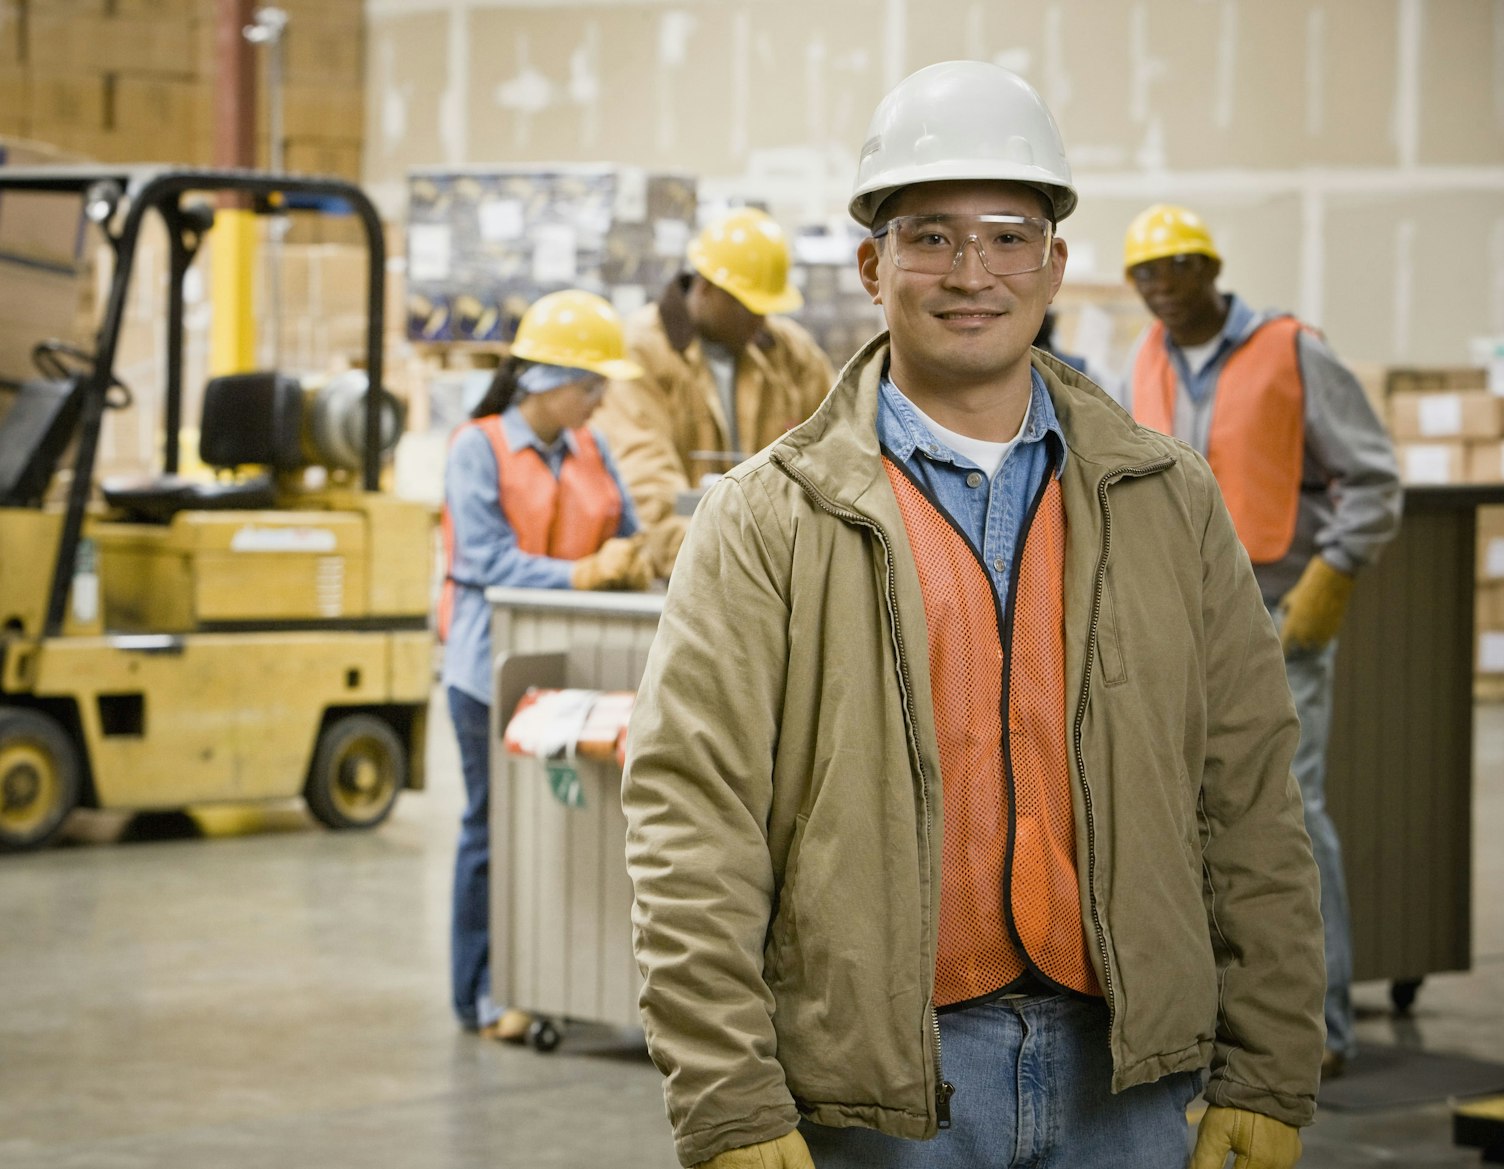 Worker Wearing a Safety Helmet